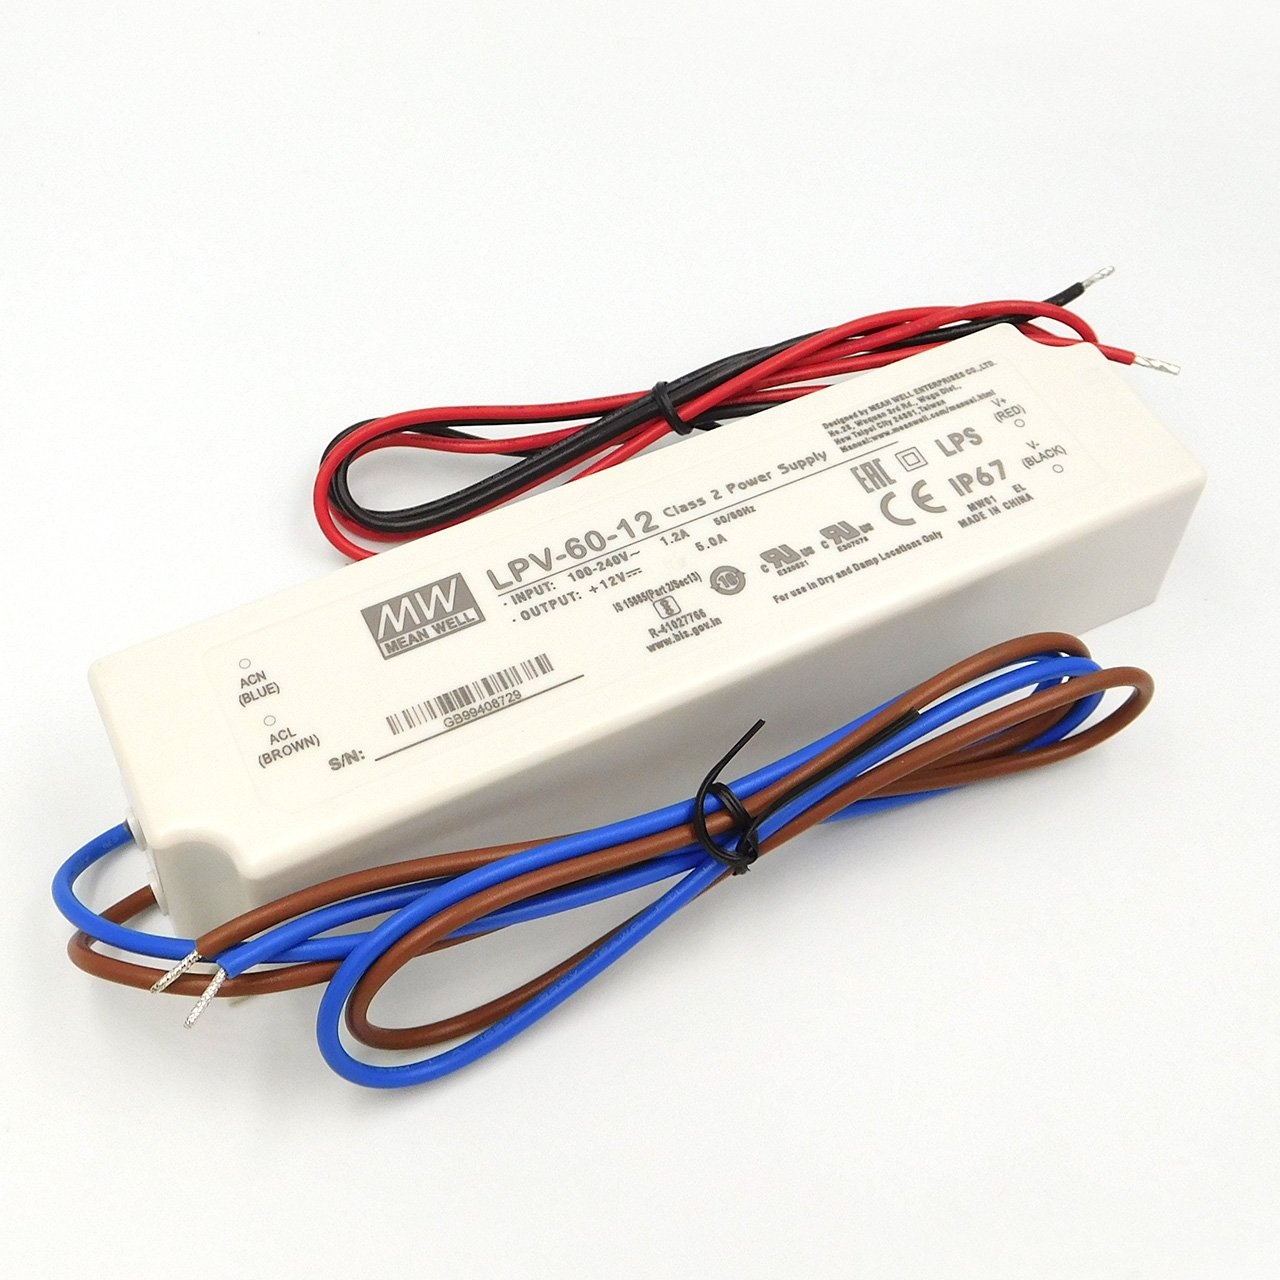 LPV-60-12 LED Power Supply 120W Single output 12v 10A - R&M Lighting